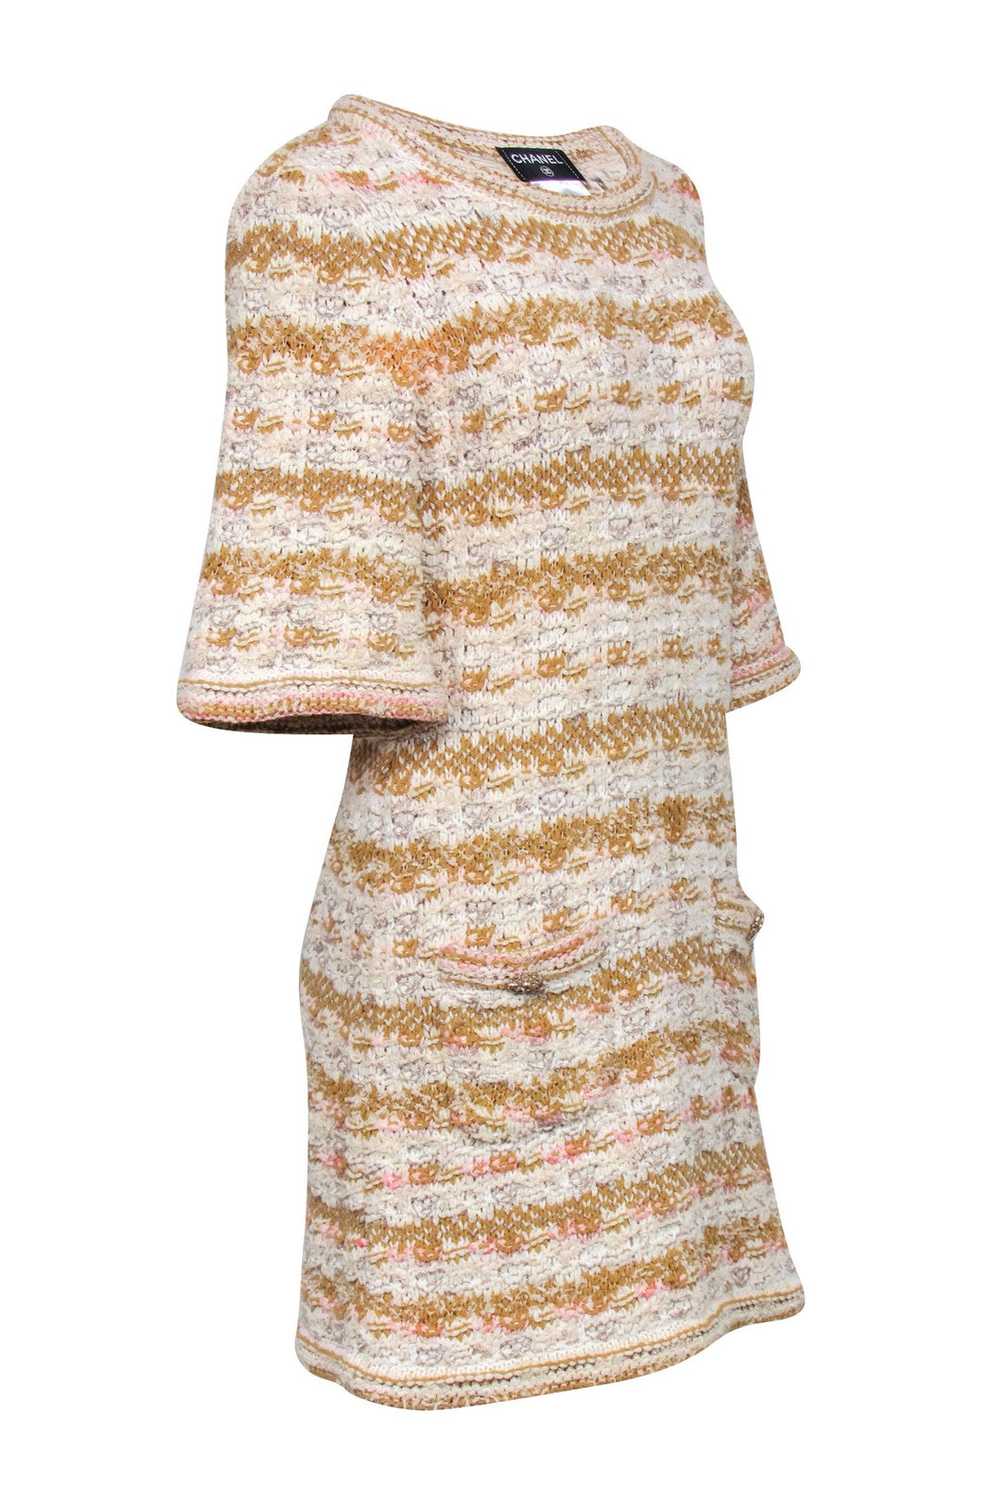 Chanel - Ivory, Tan, & Pink Tweed Knit Dress Sz 4 - image 2